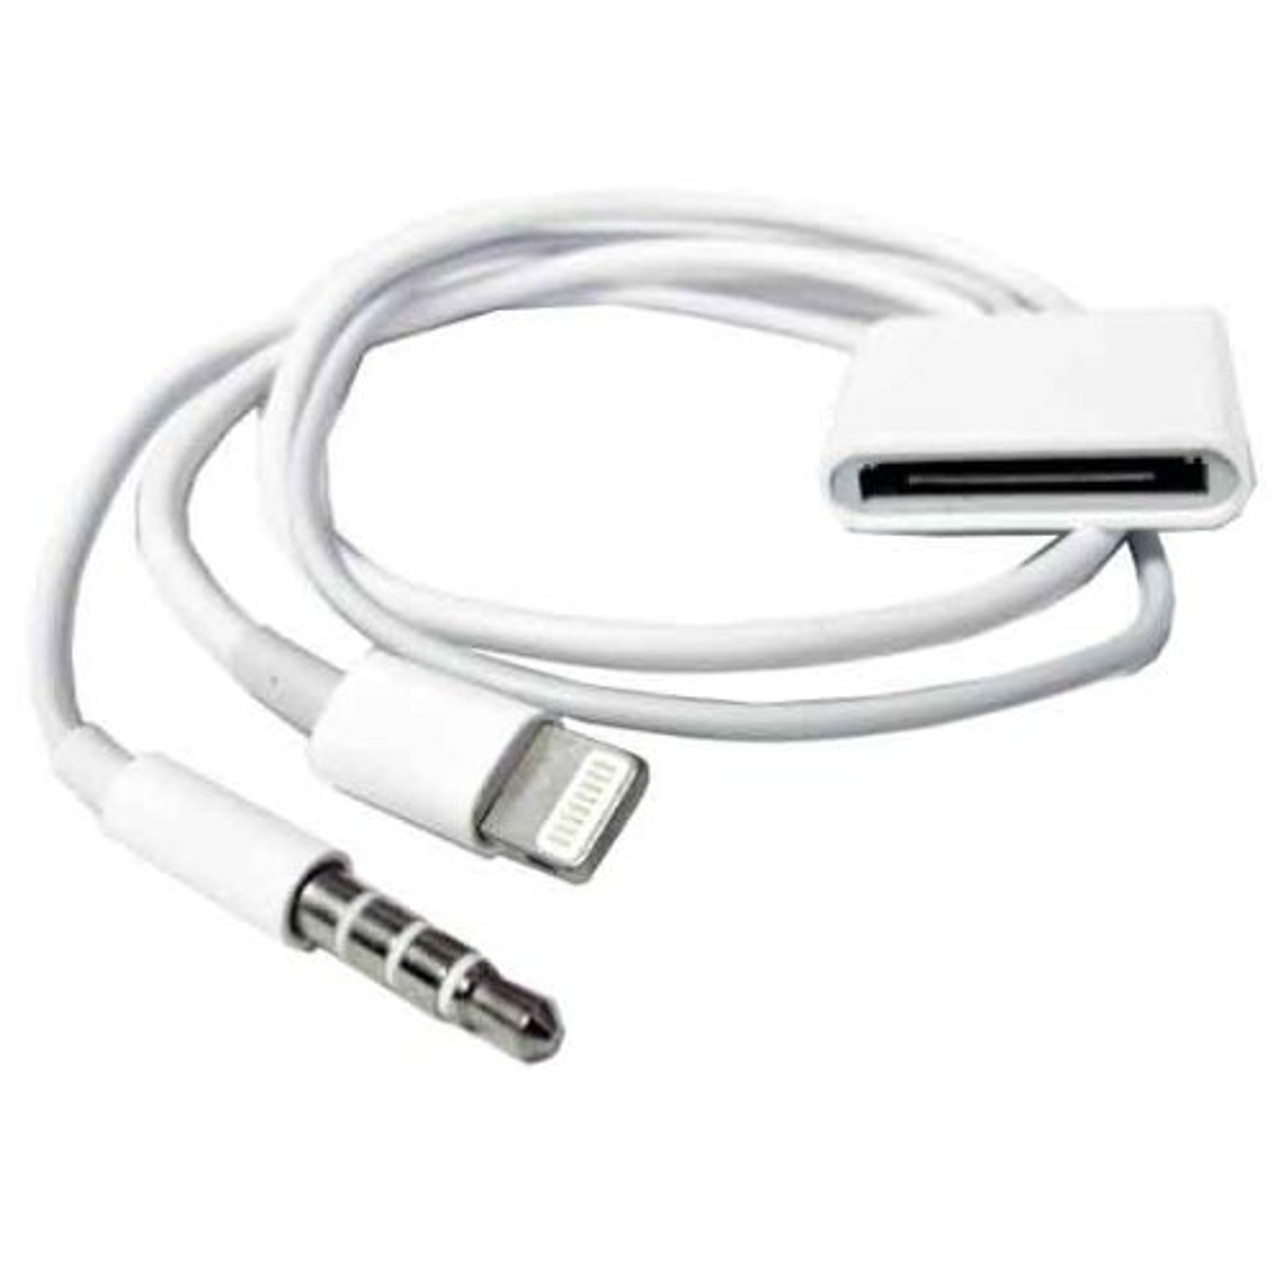 opleiding is genoeg Denk vooruit Apple 30-pin to Lightning Adapter iPhone 5 6 iPad iPod - CD4Car